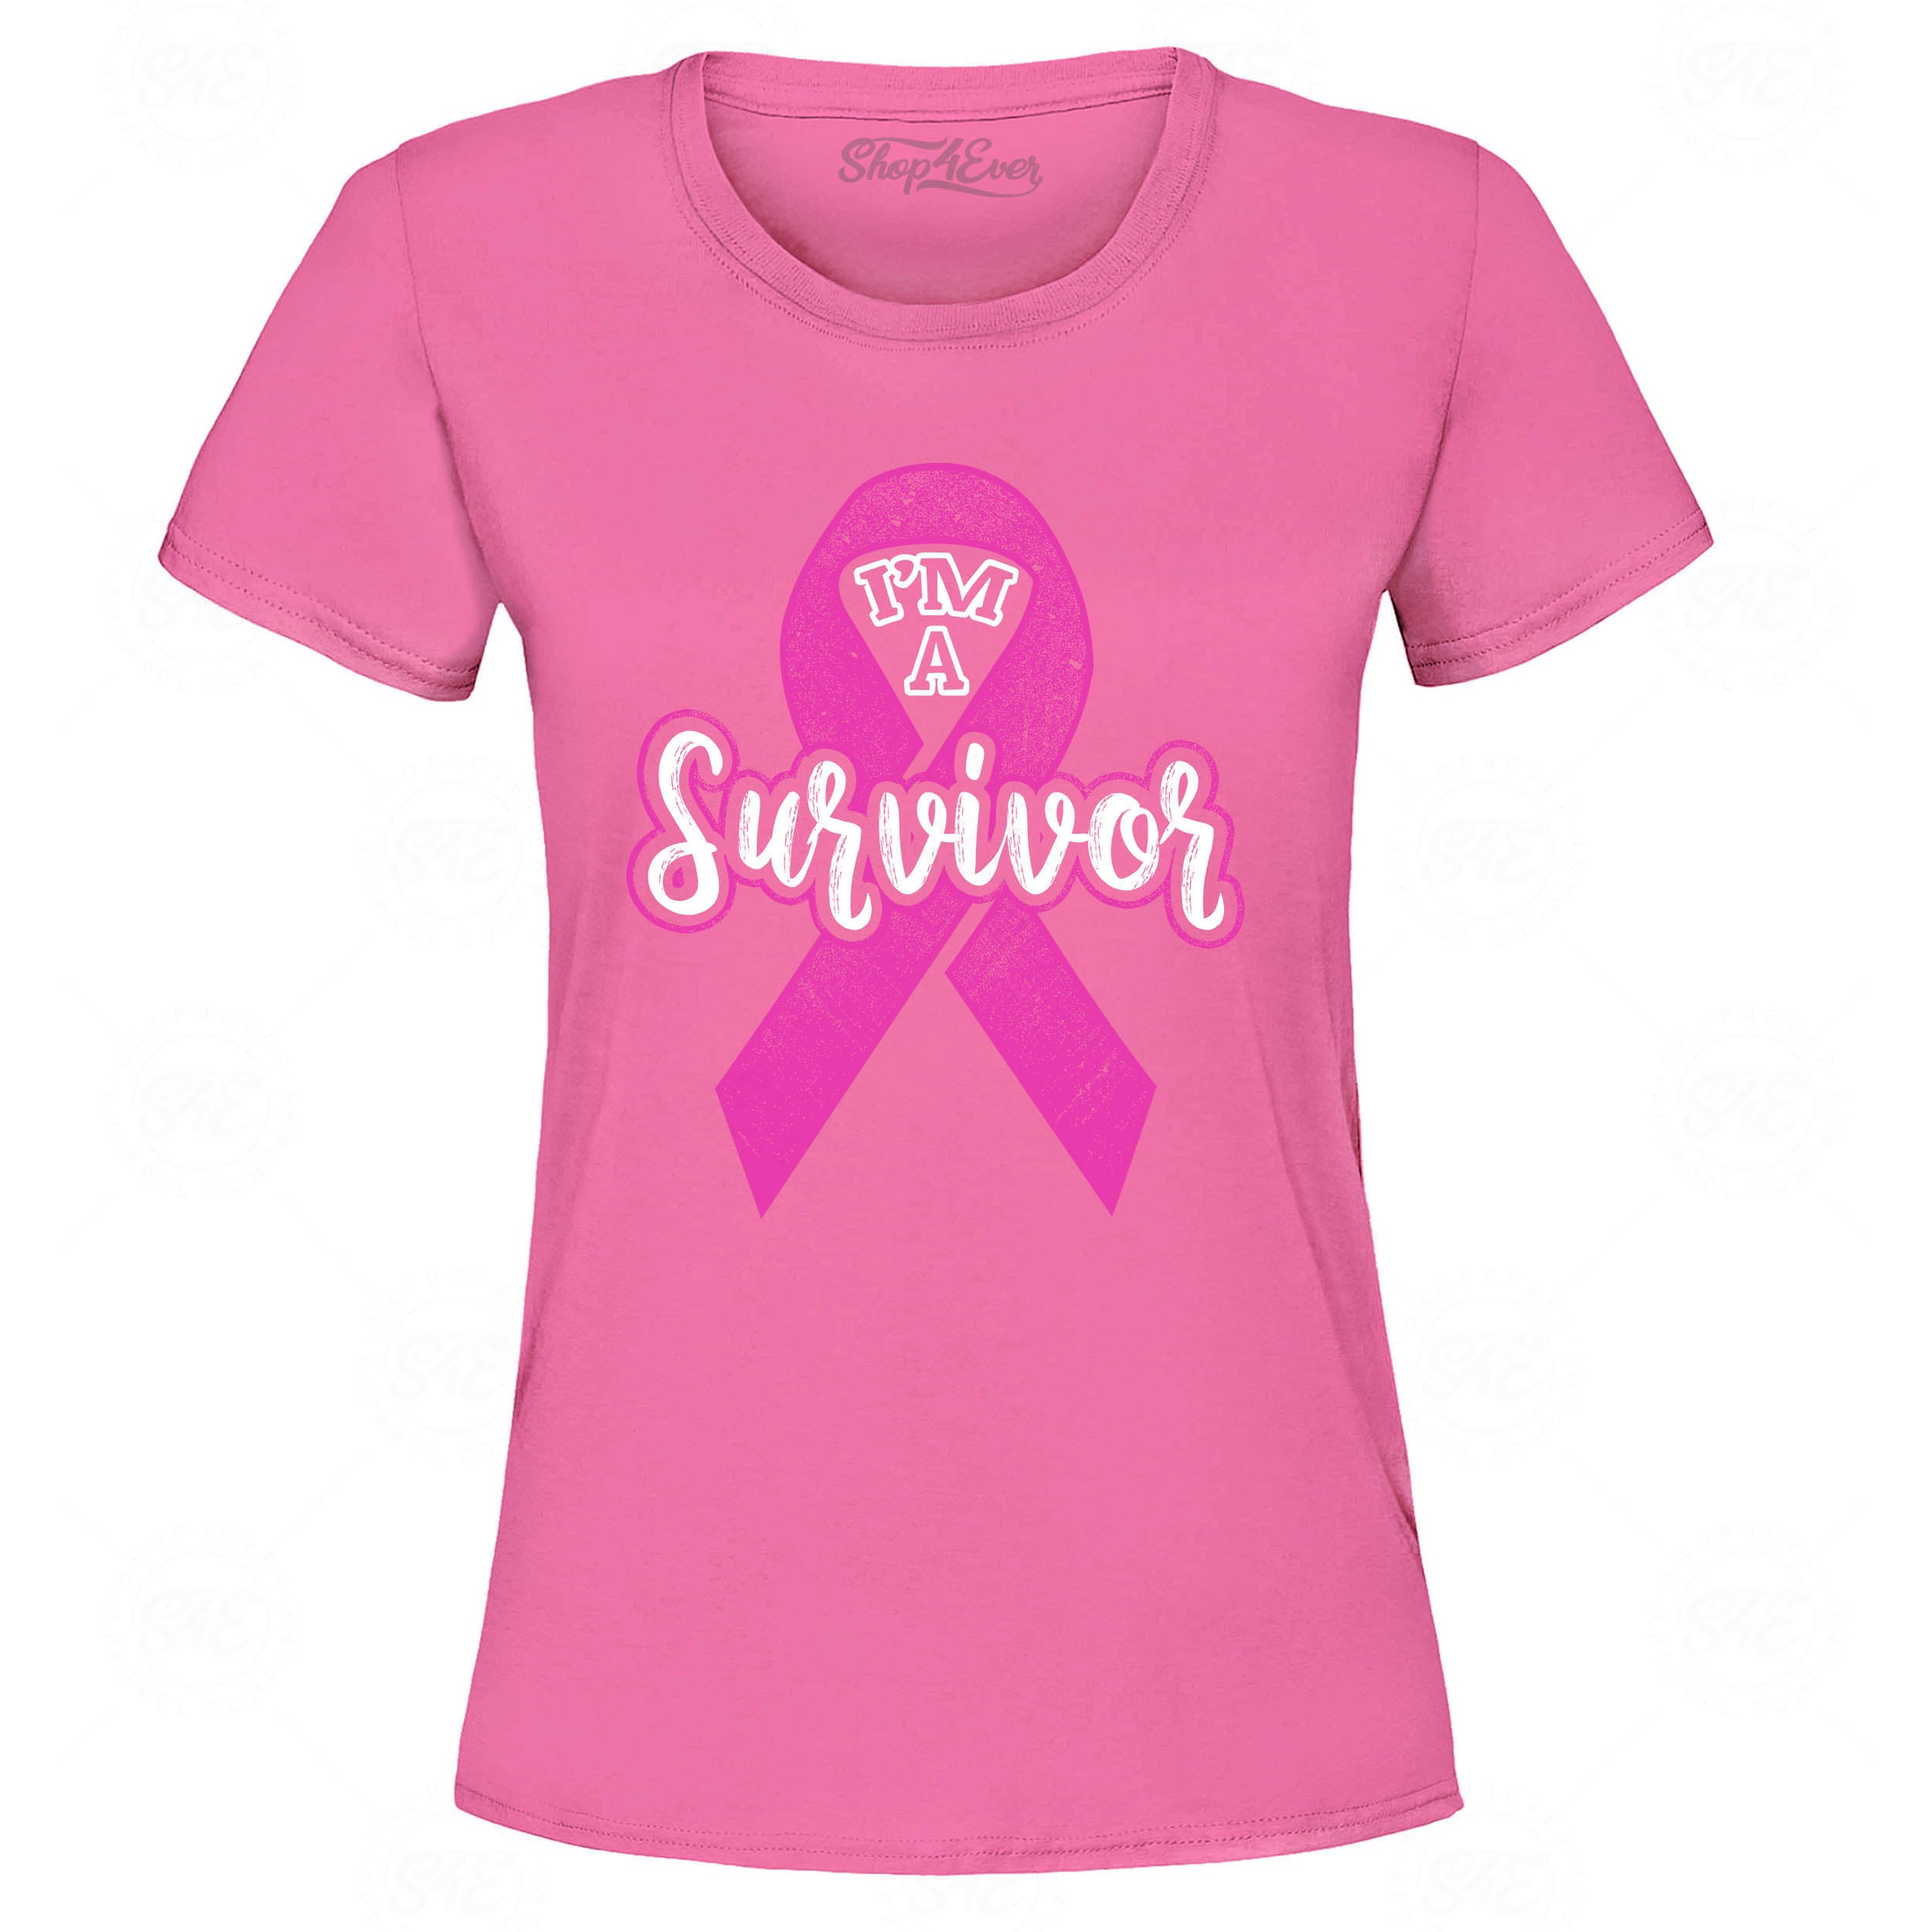 I'm A Survivor Breast Cancer Awareness Women's T-Shirt Pink Ribbon Tee